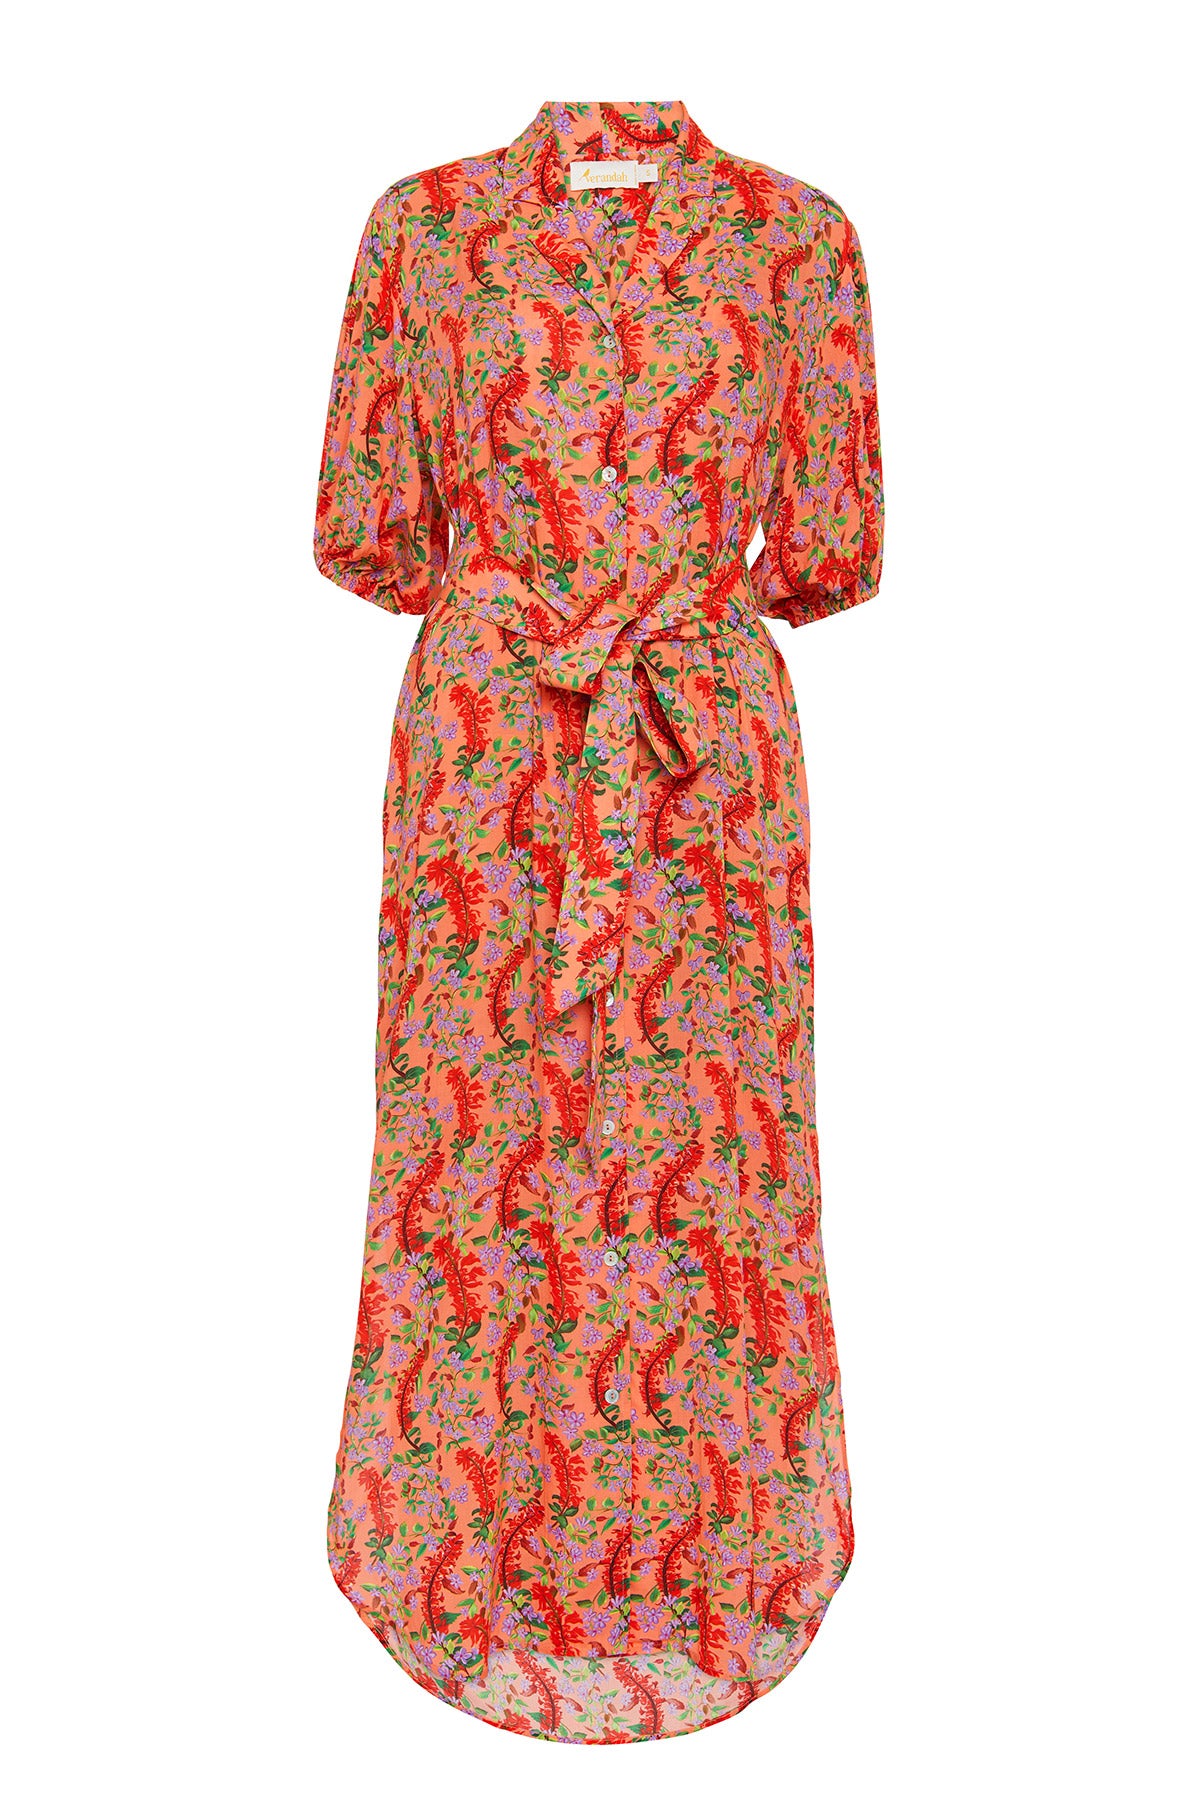 Coral floral dress